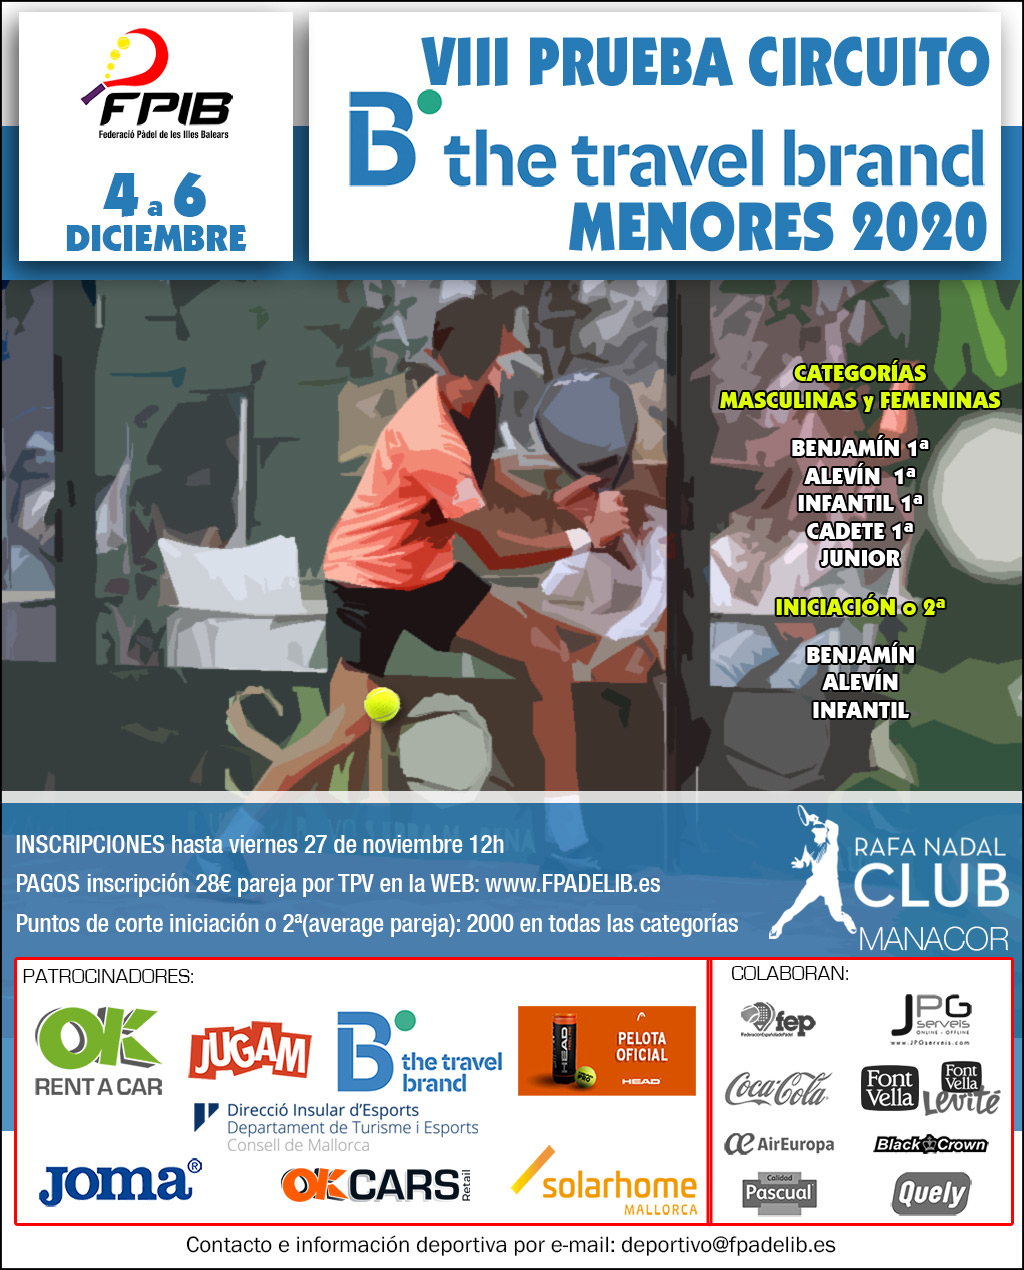 VIII Prueba Circuito B the travel brand de menores - 2020